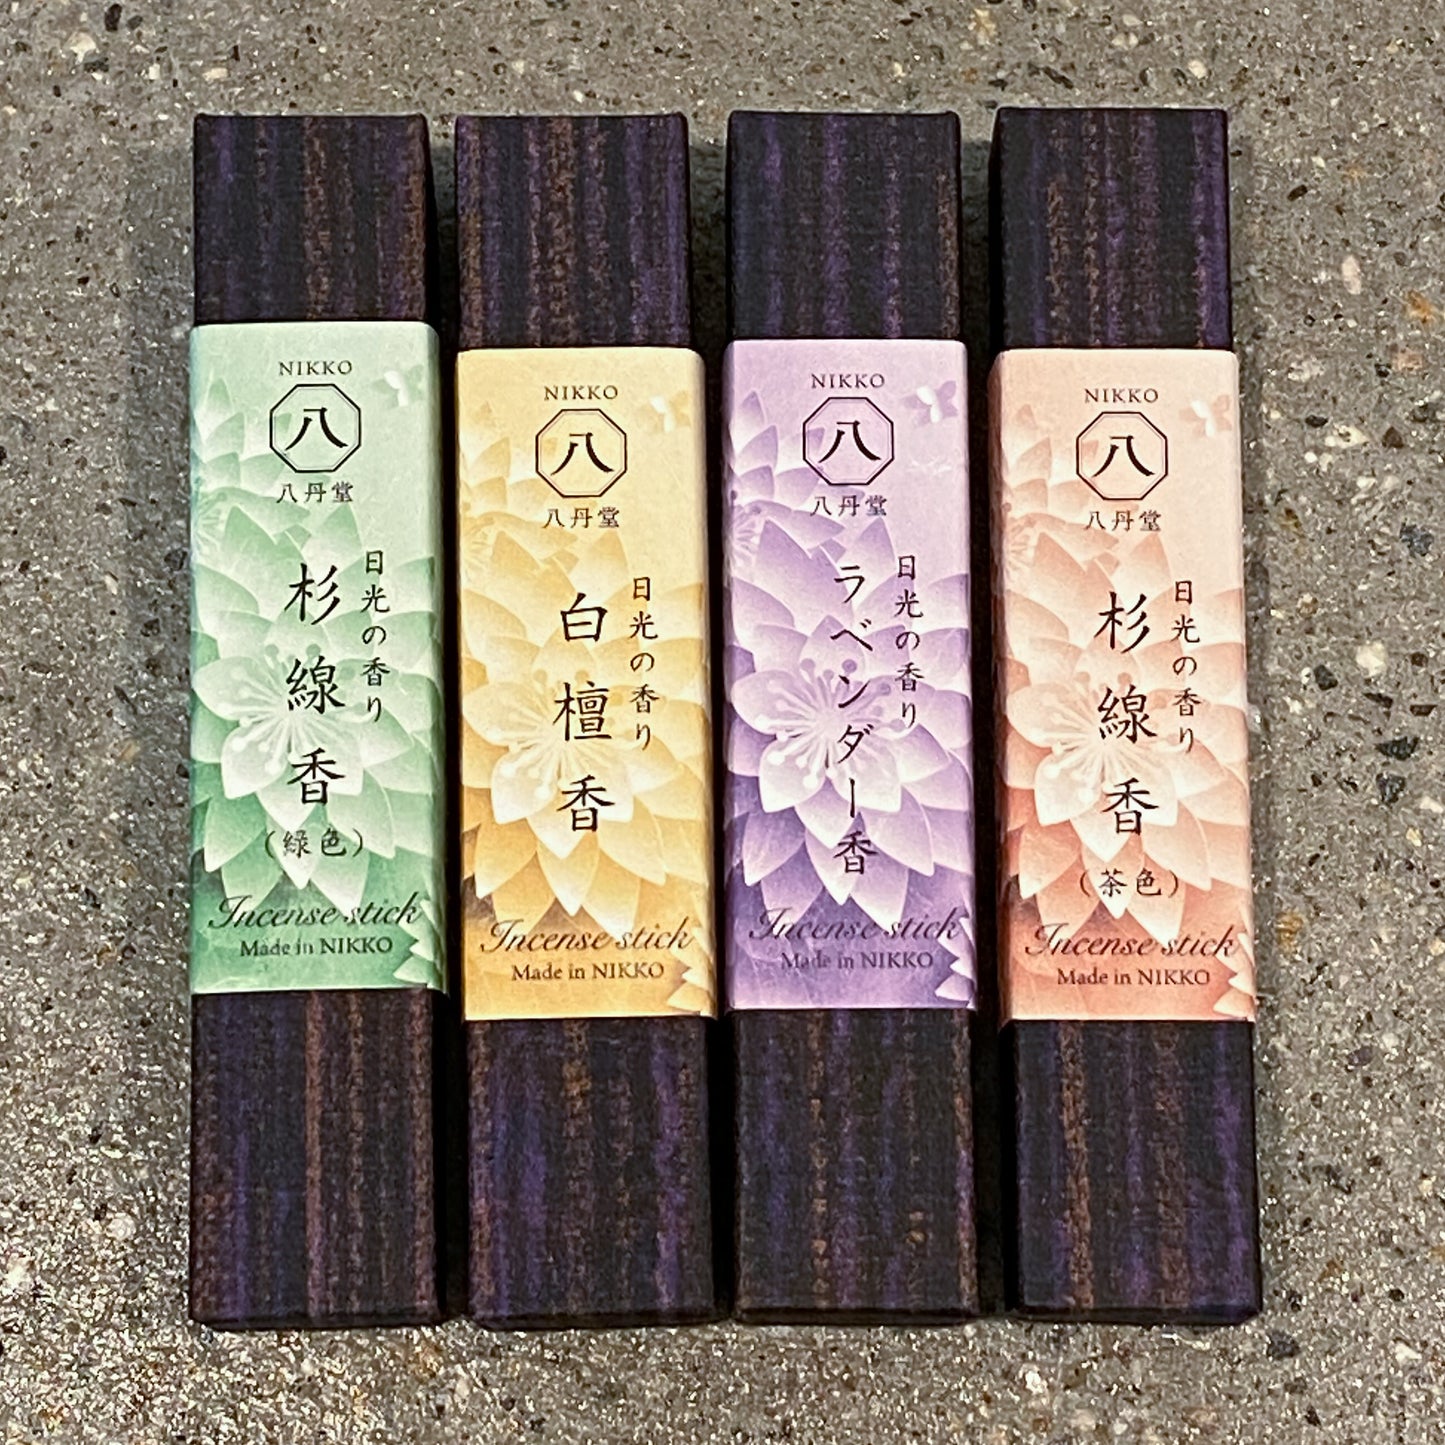 Japanese Cedarwood Incense